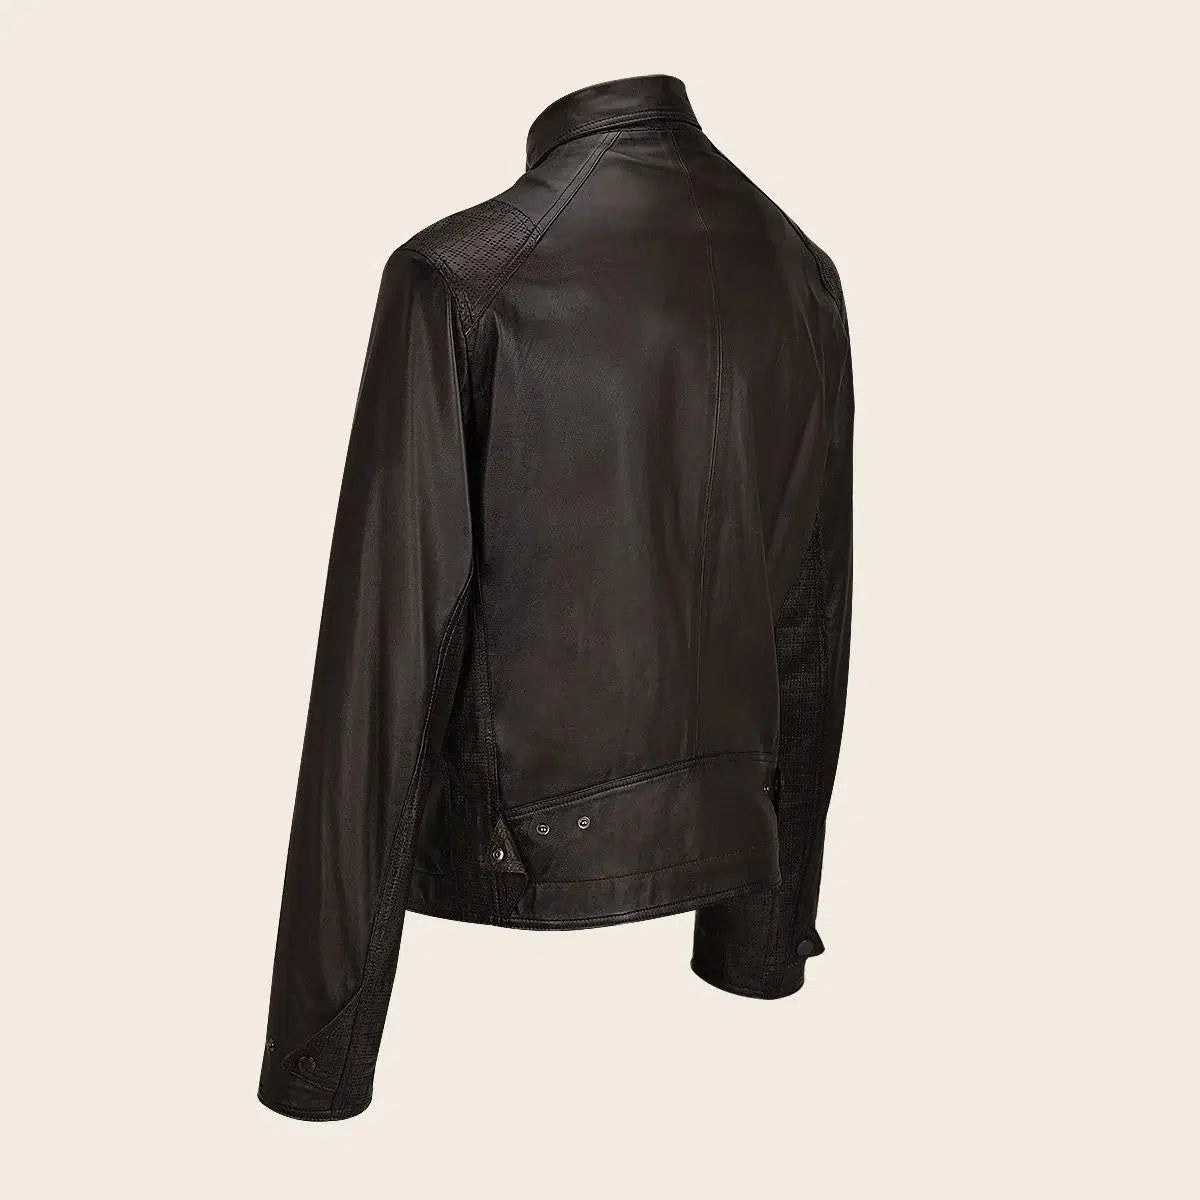 H328COC - Cuadra black dress casual fashion blouson leather jacket for men-Kuet.us